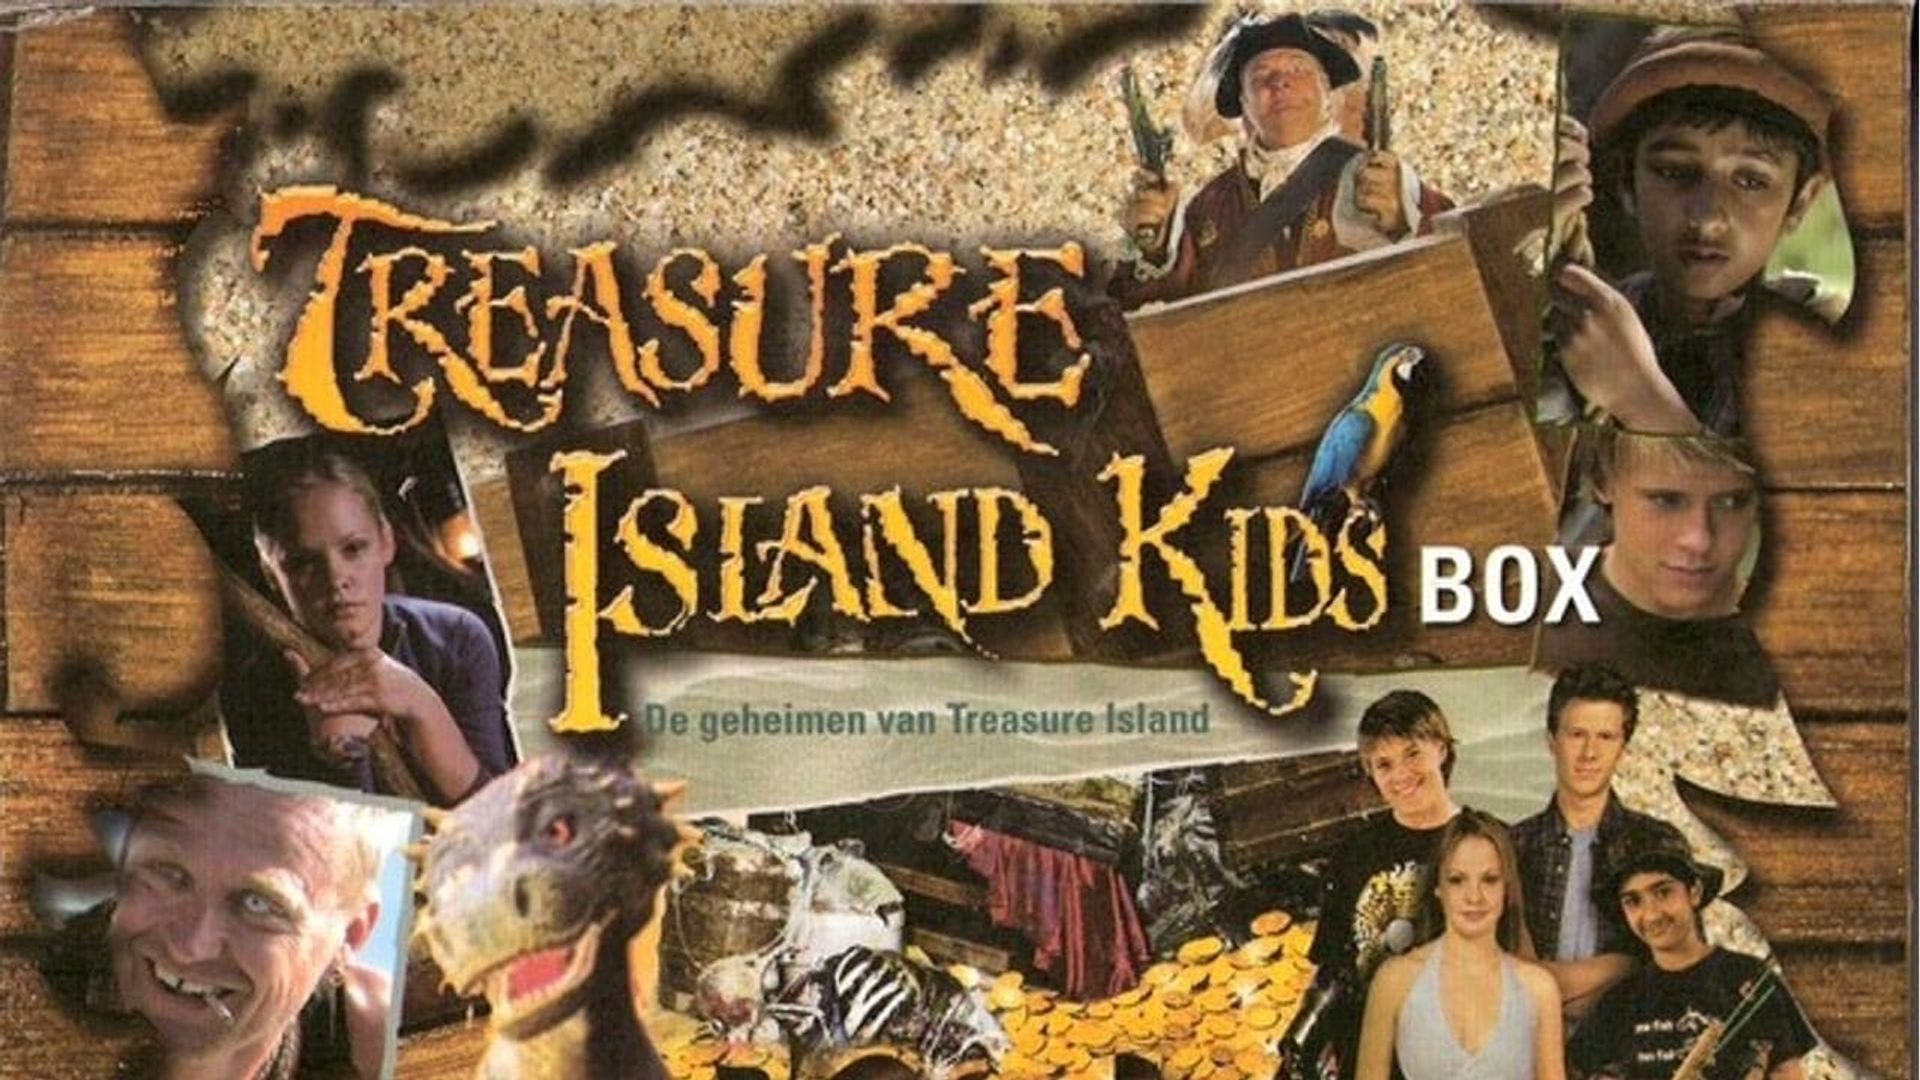 Treasure Island Kids: The Battle of Treasure Island background